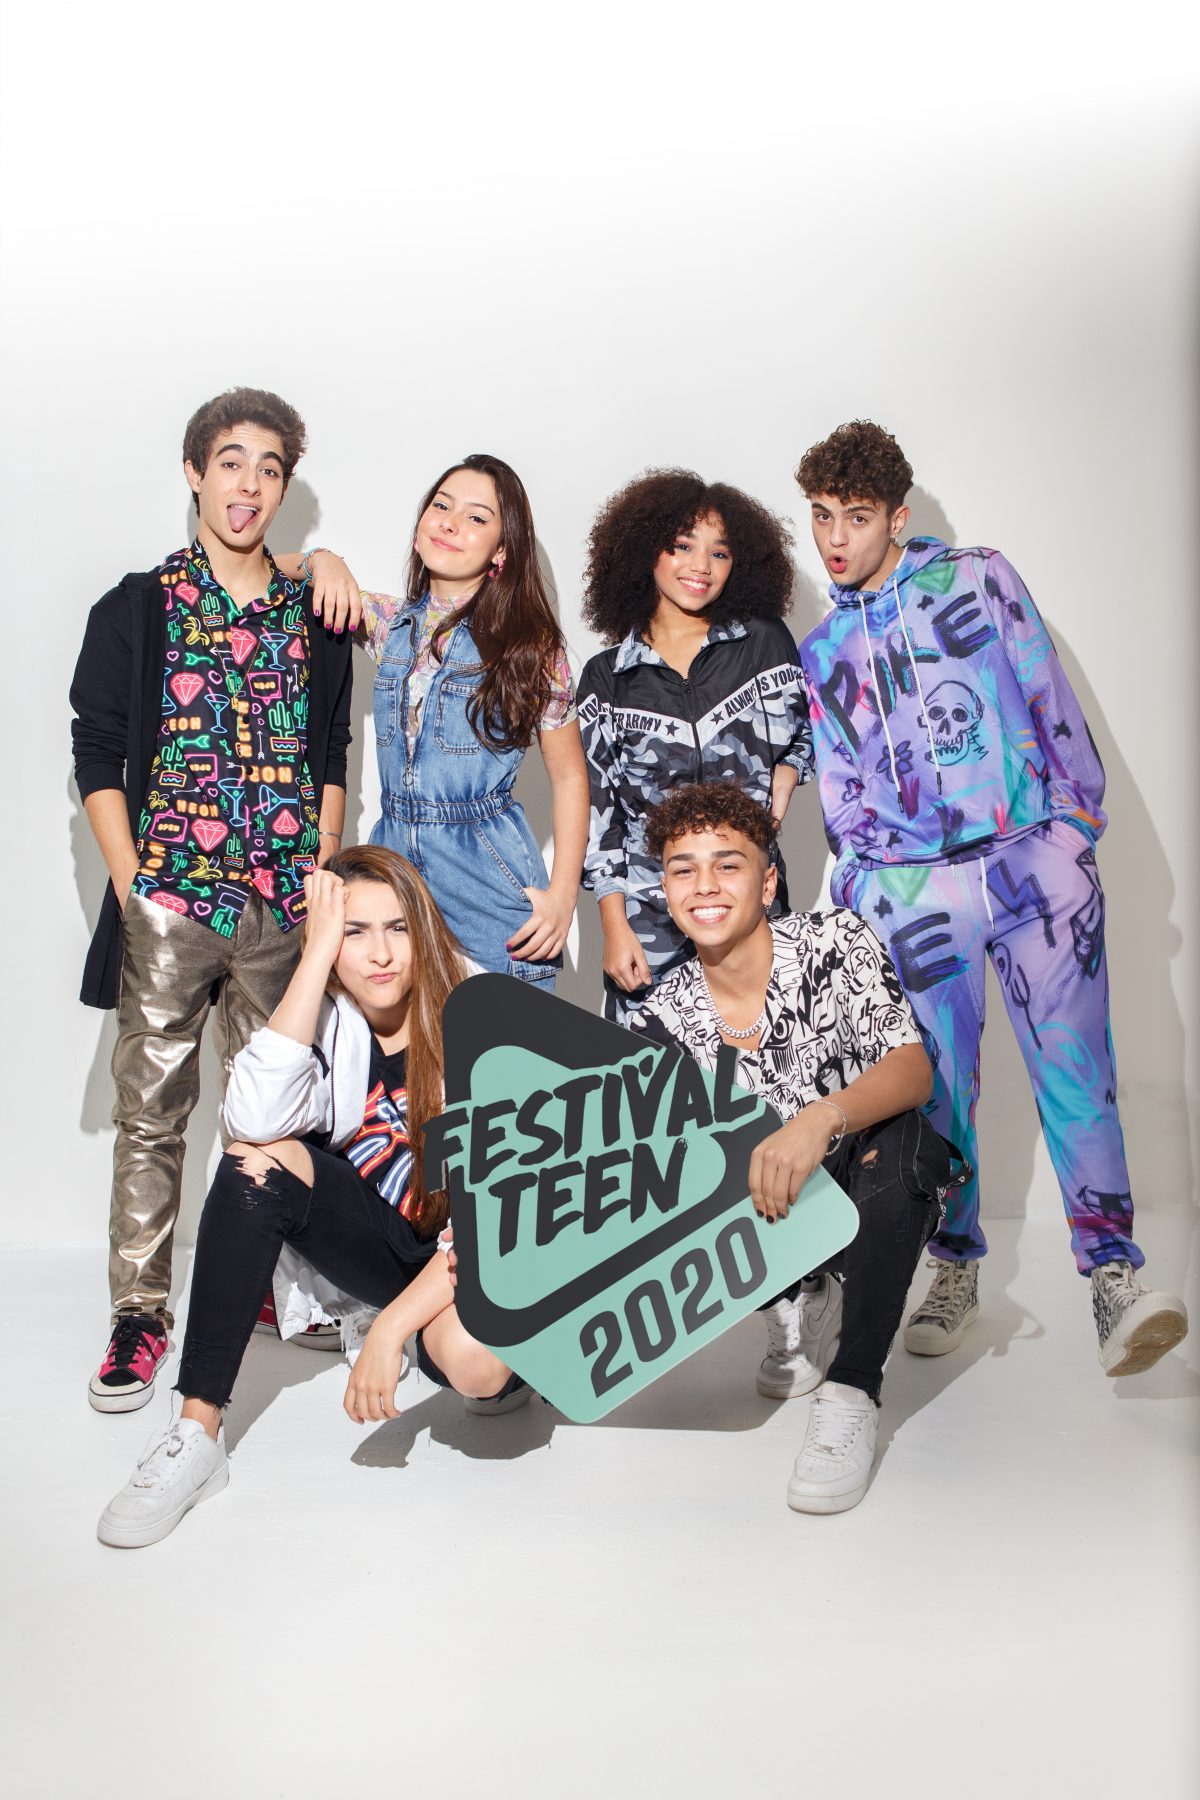 Festival Teen 2020 divulga line-up